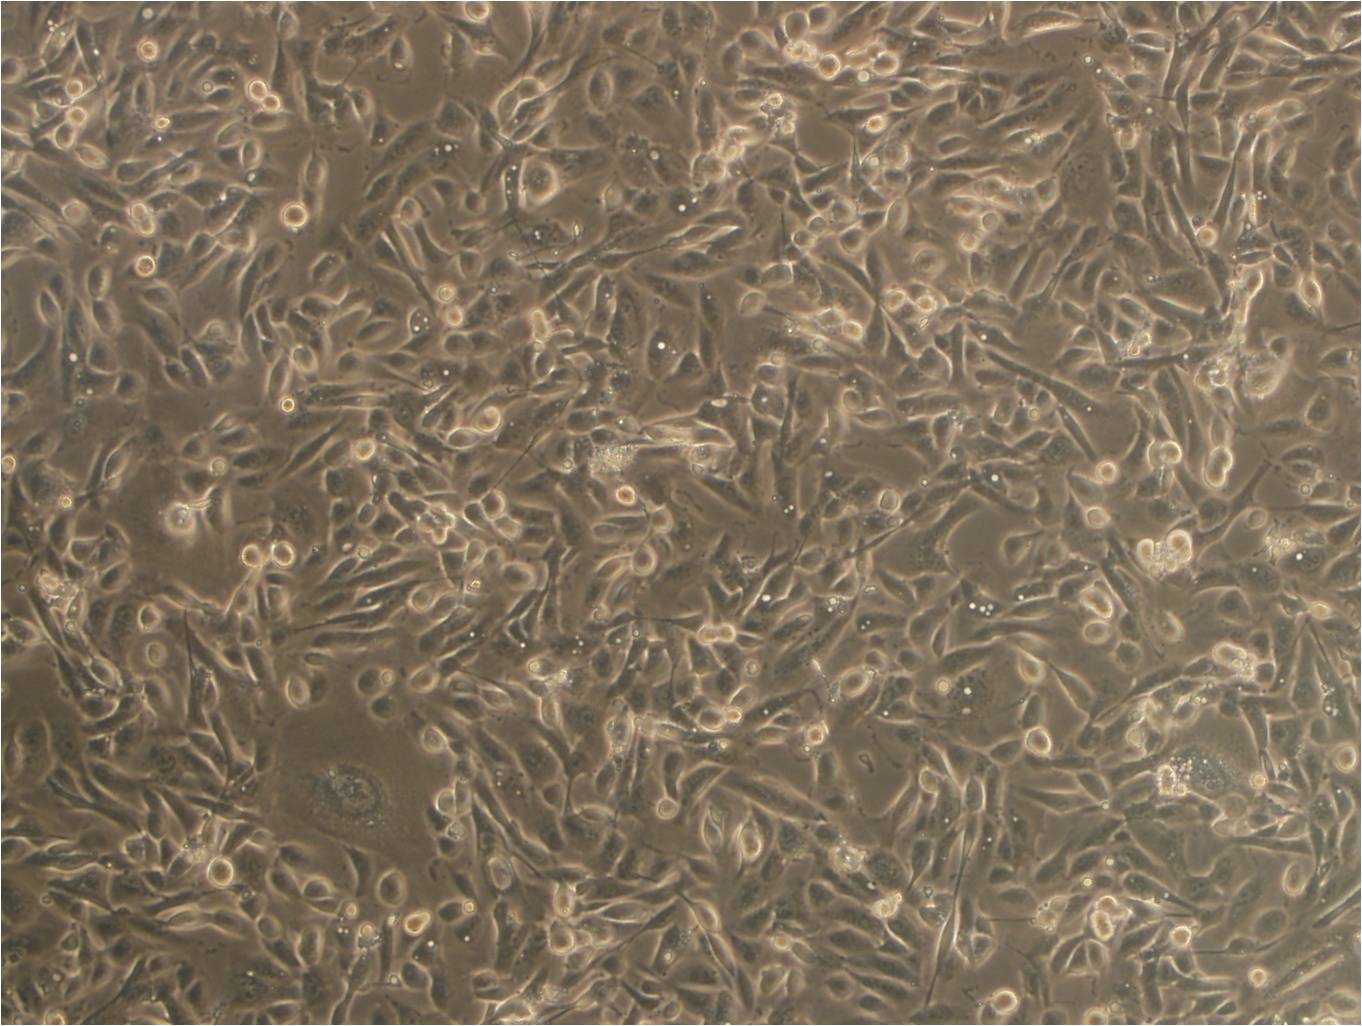 NSC-34 Cell:鼠神经元细胞系